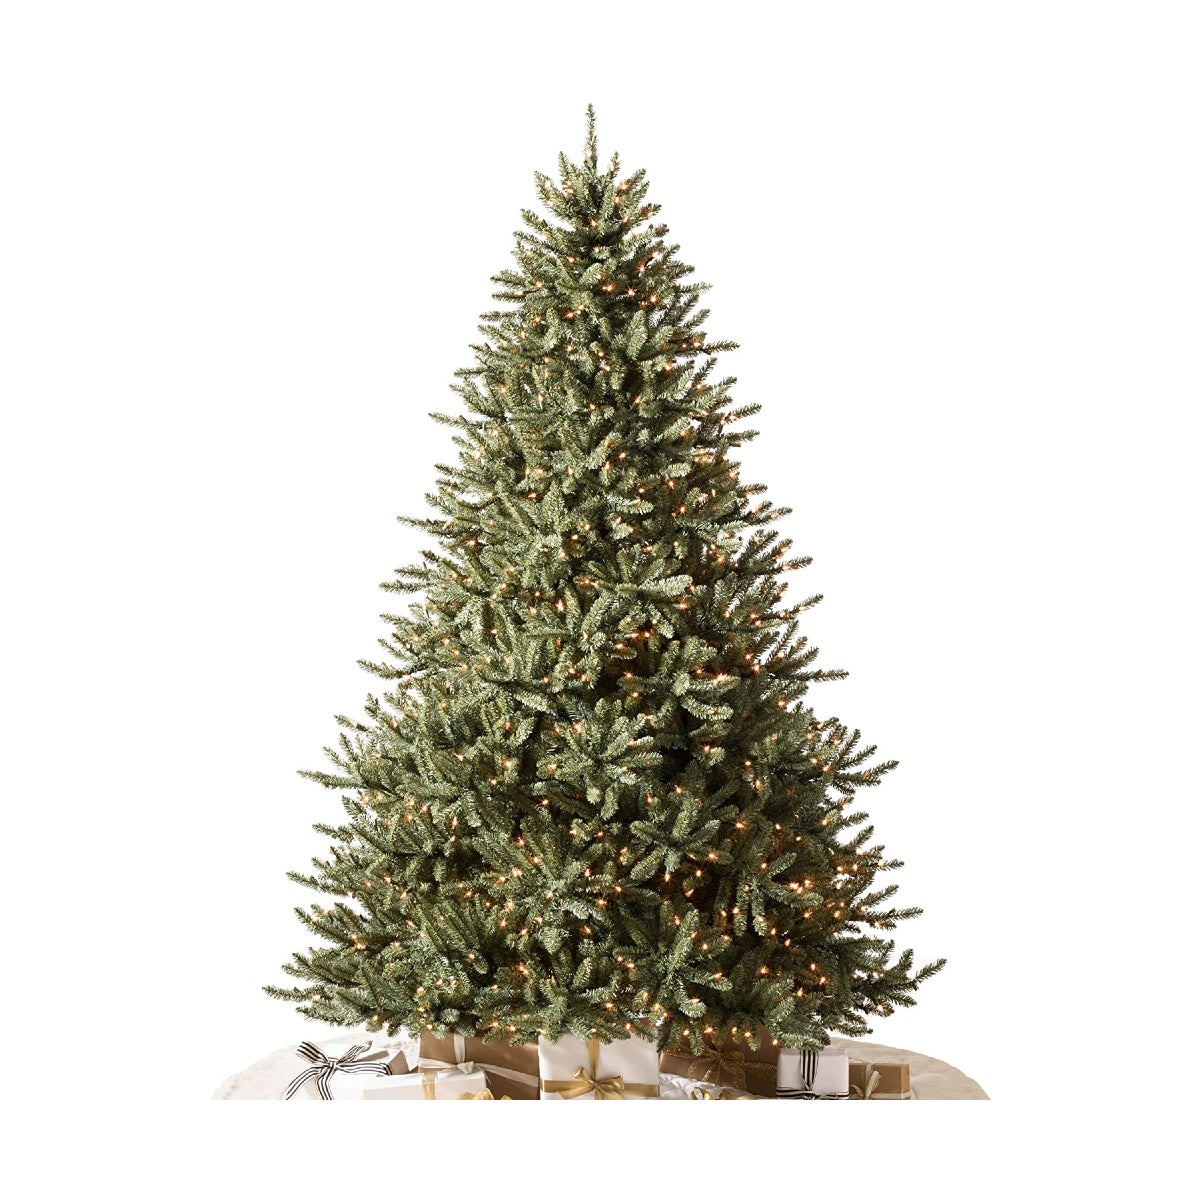 The Best Christmas Decorations Option Amazon